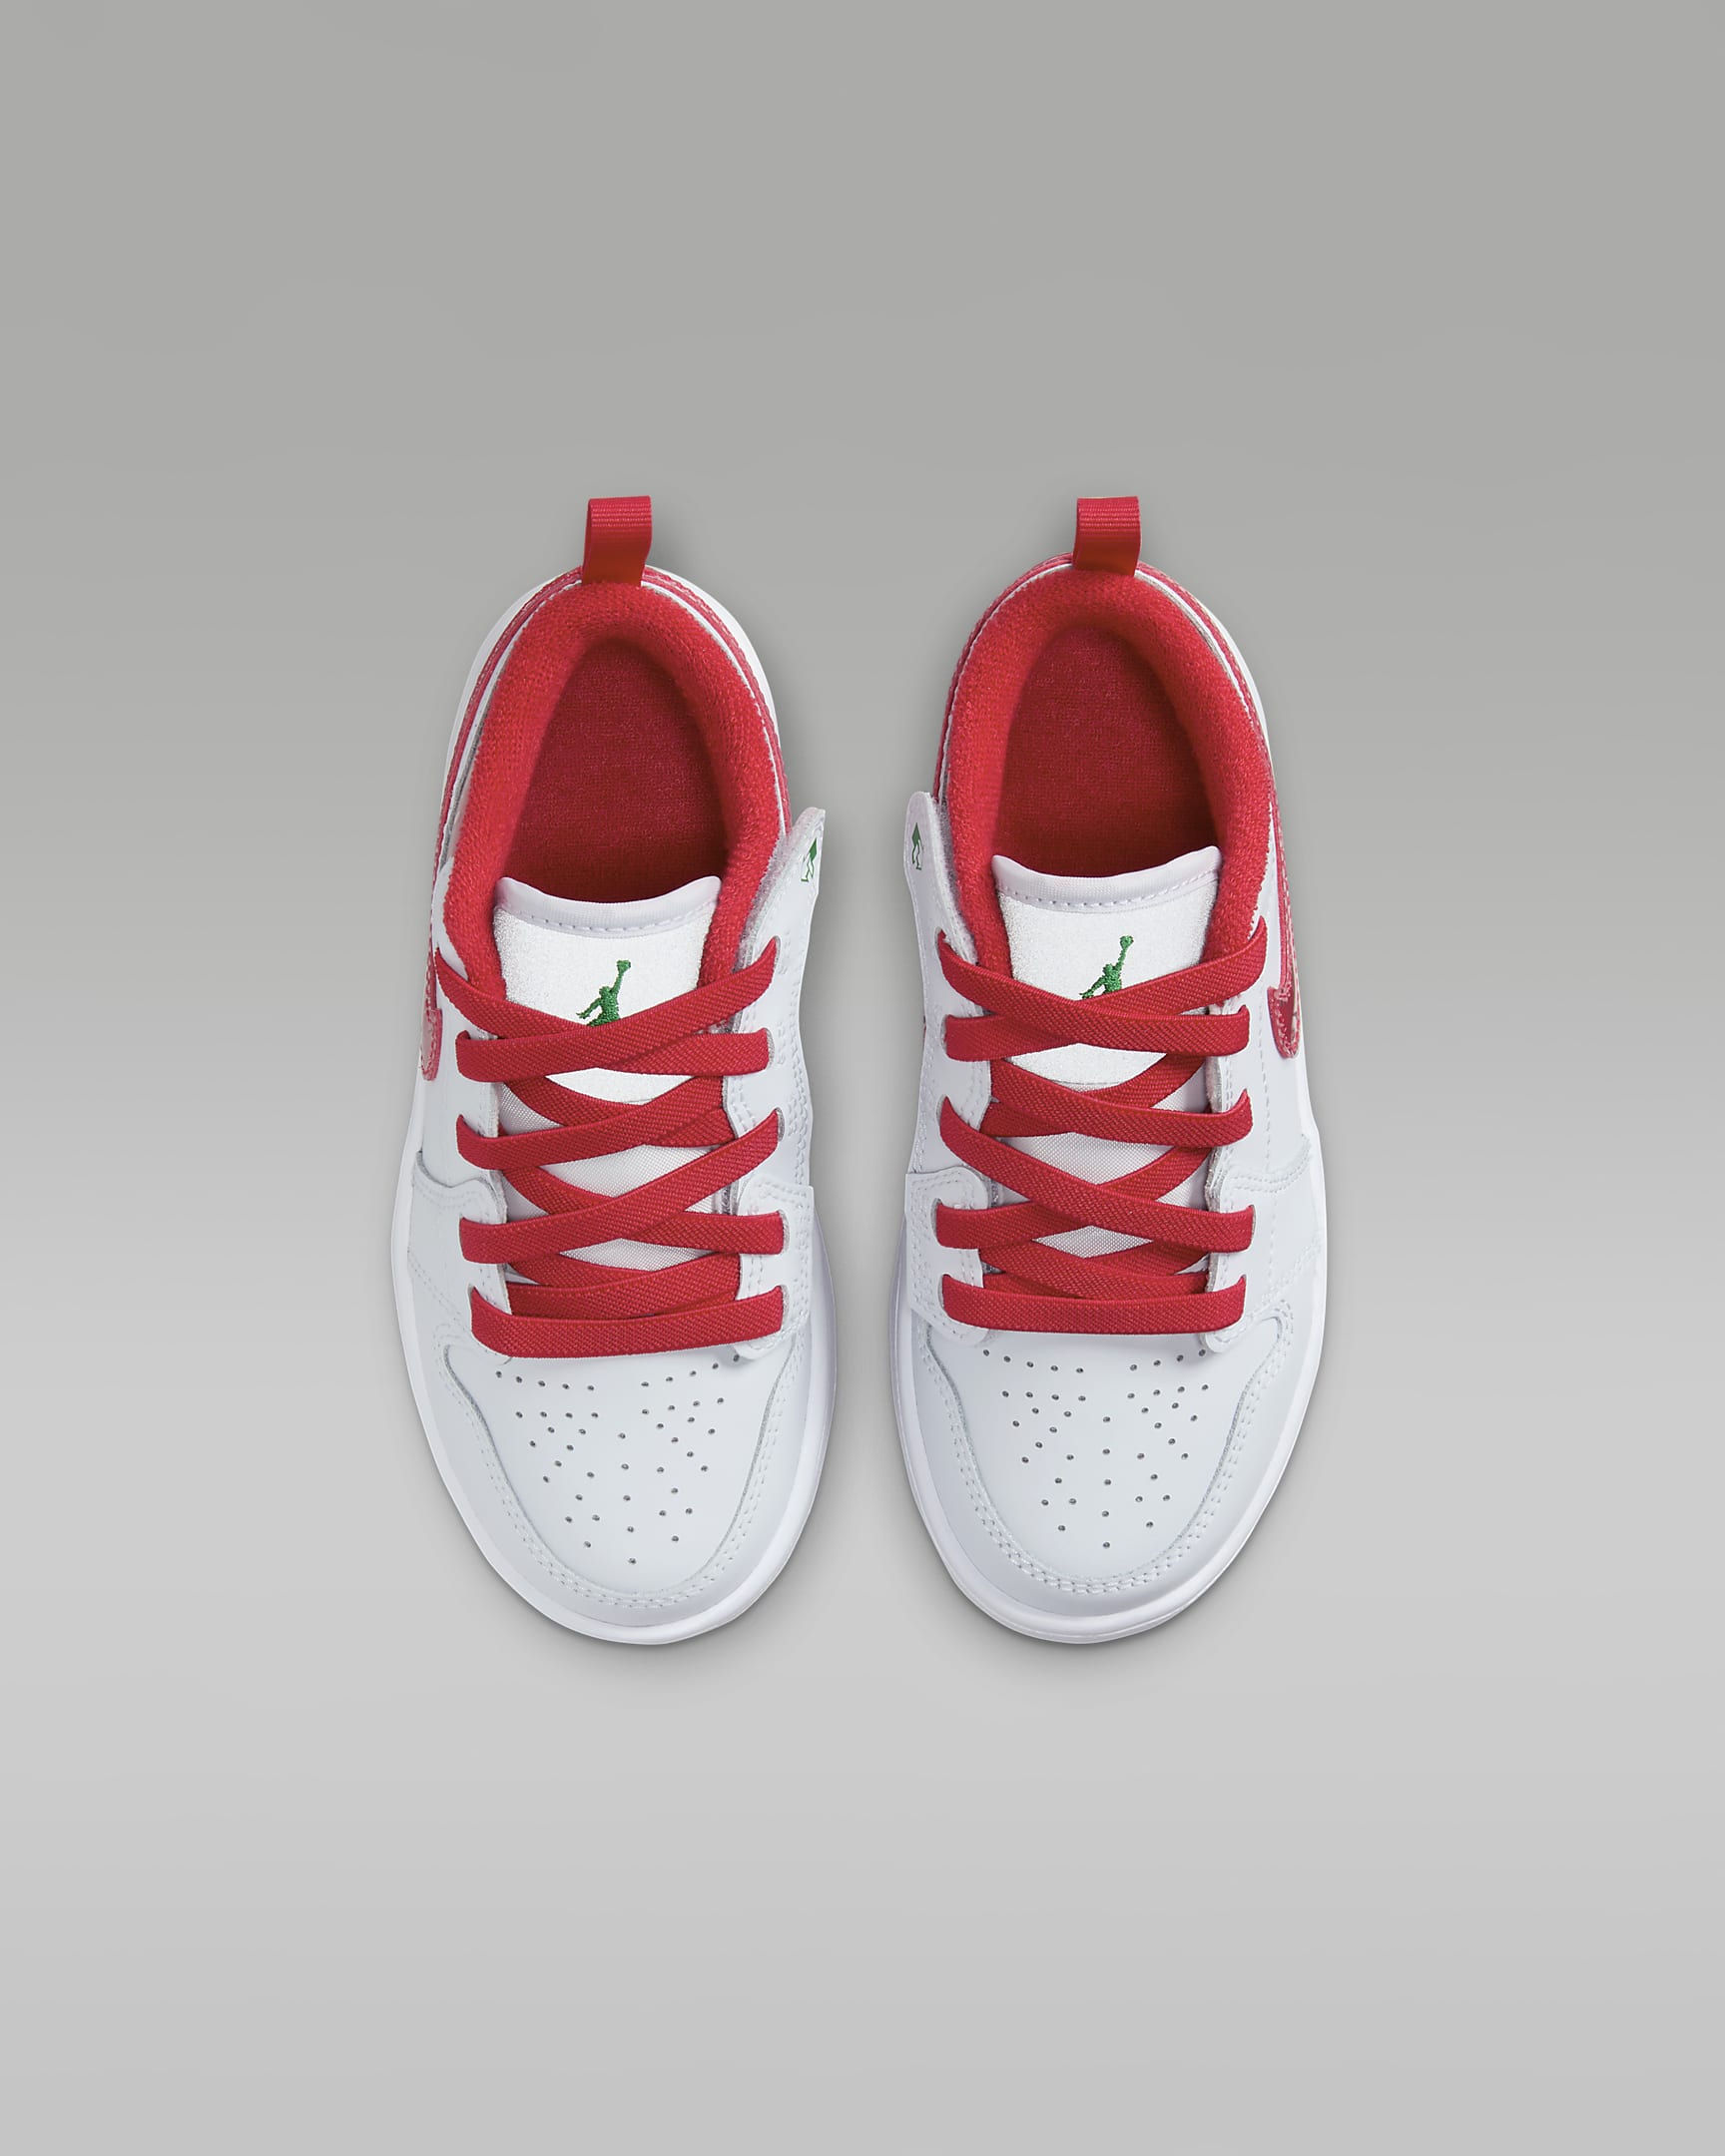 Jordan 1 Low Alt SE Little Kids' Shoes - Football Grey/Pine Green/White/University Red